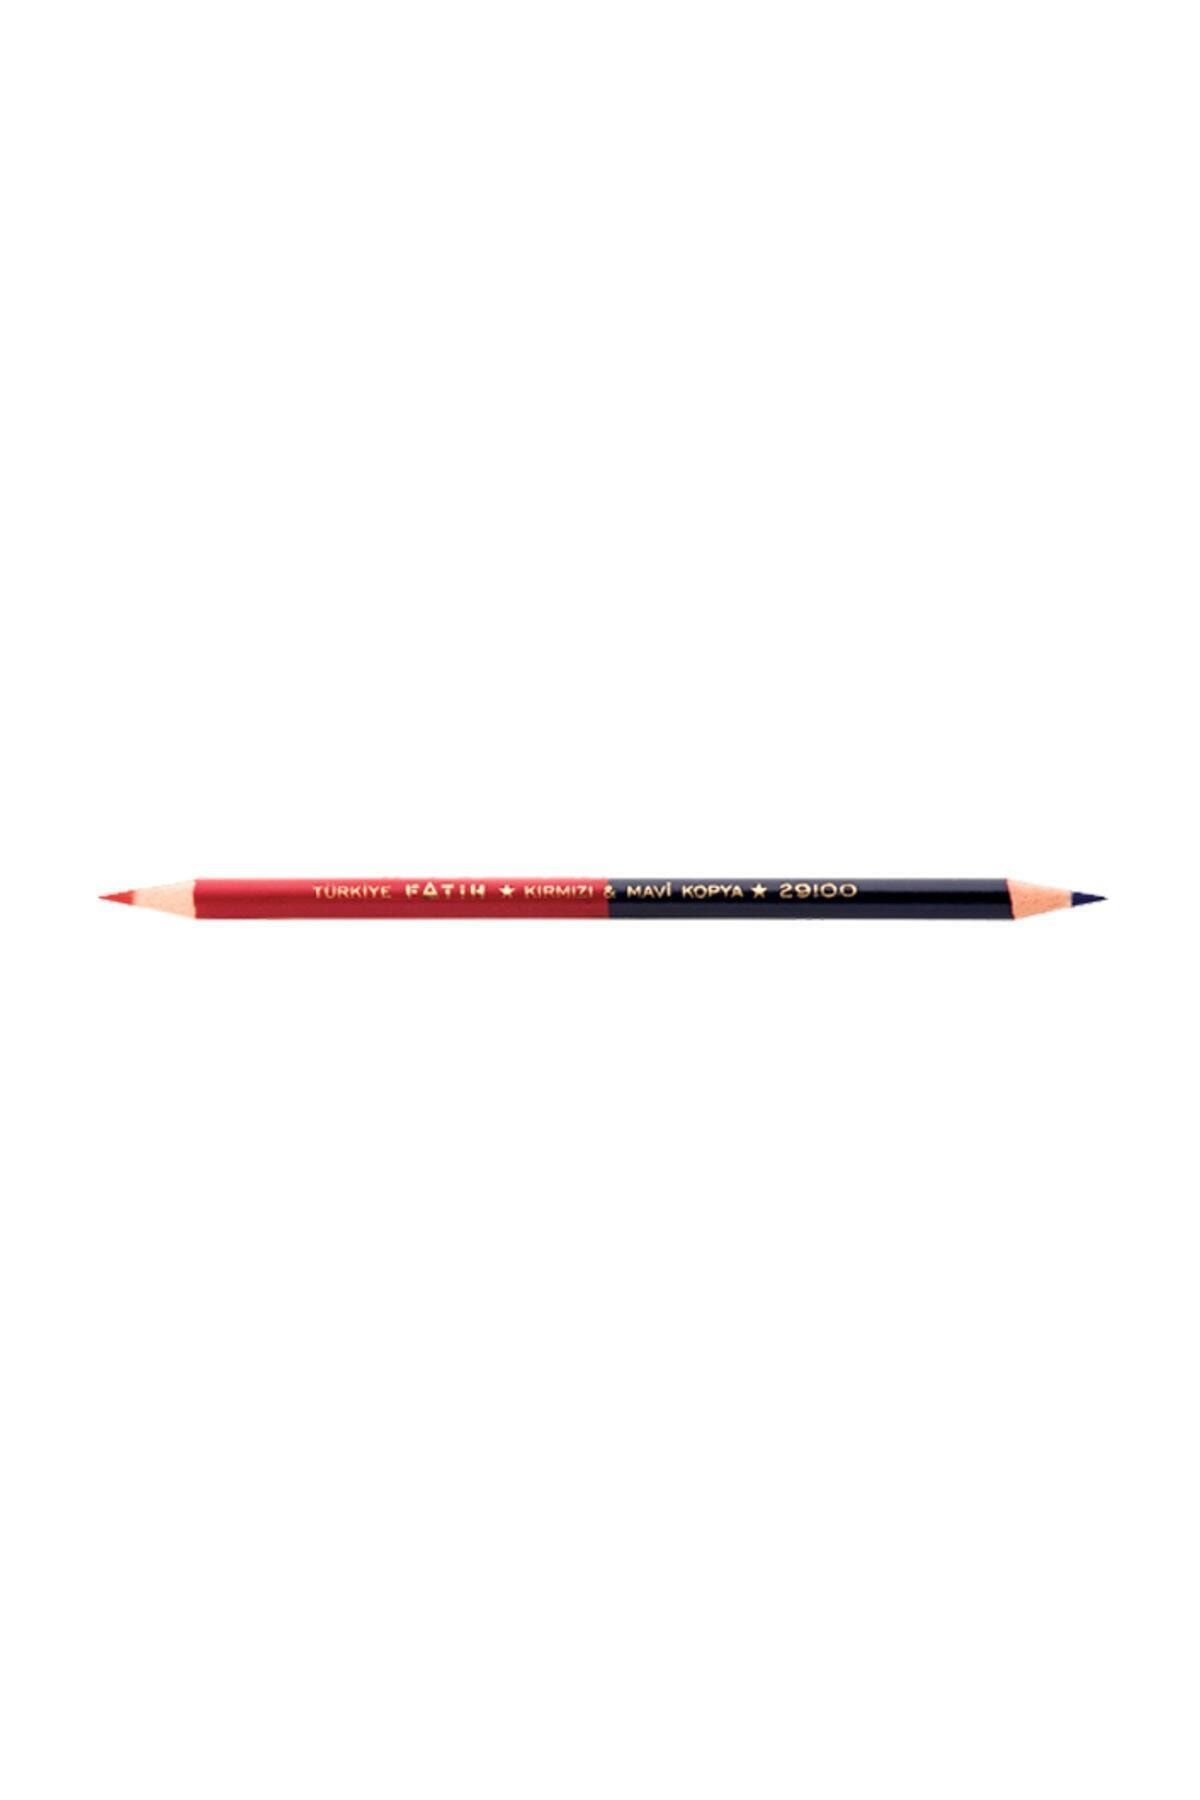 Fatih قلم کپی قرمز-آبی 12 بسته Fa29100clkm (1 قطعه) 1003.00063